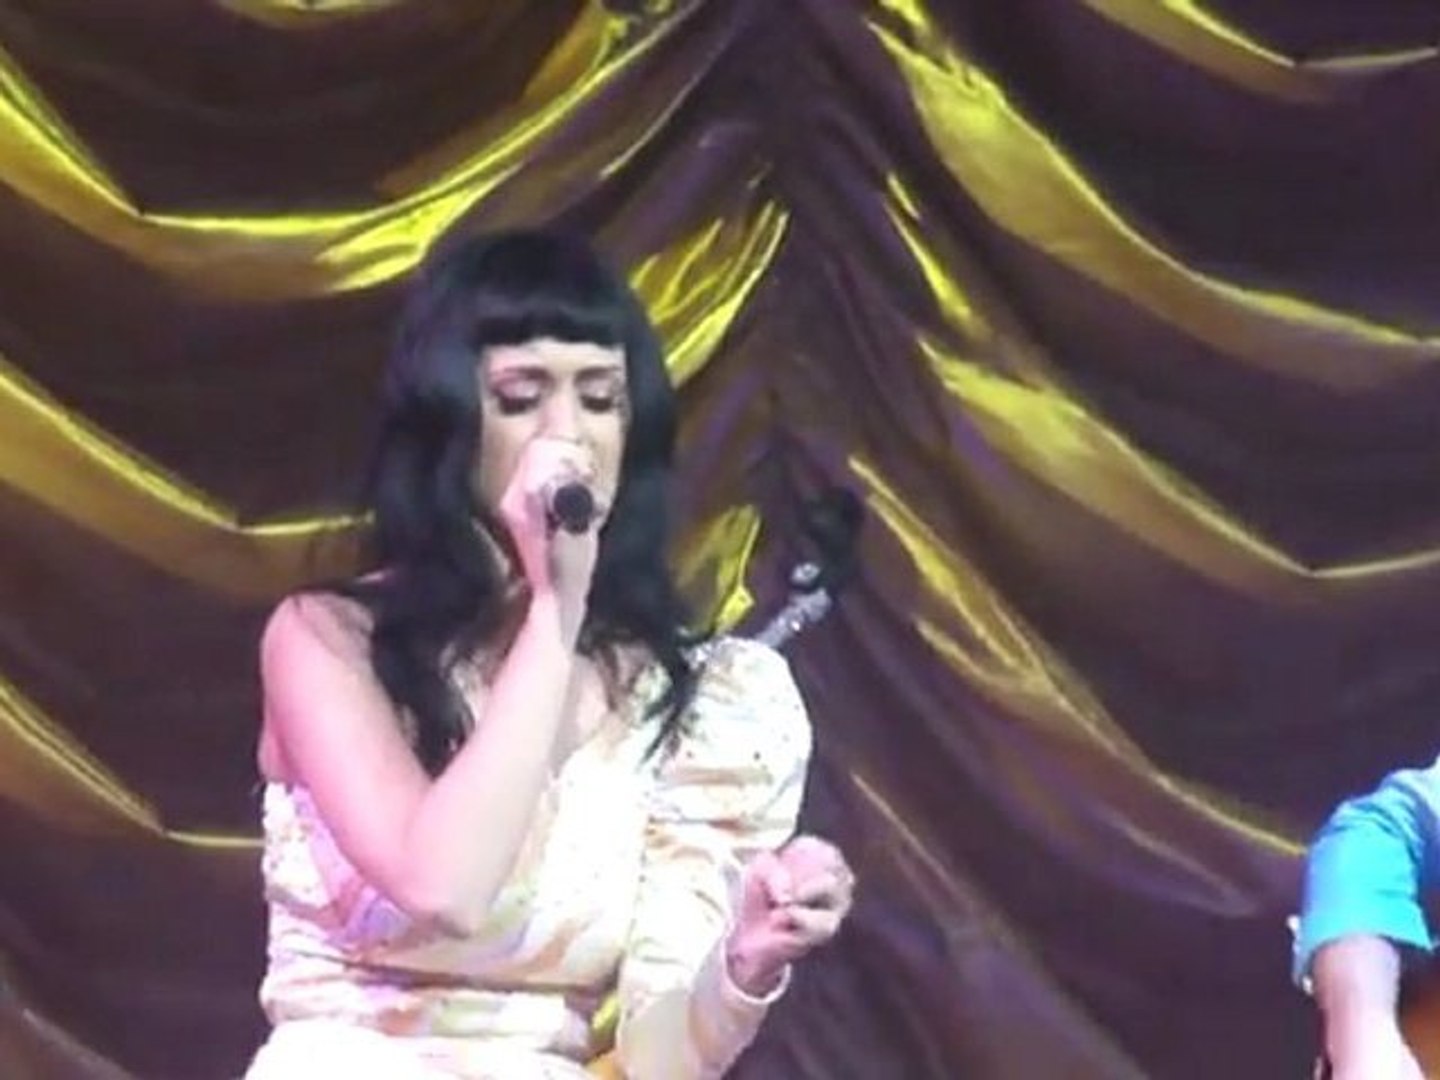 Katy Perry - Born This Way (Lady Gaga Cover) - Live Paris